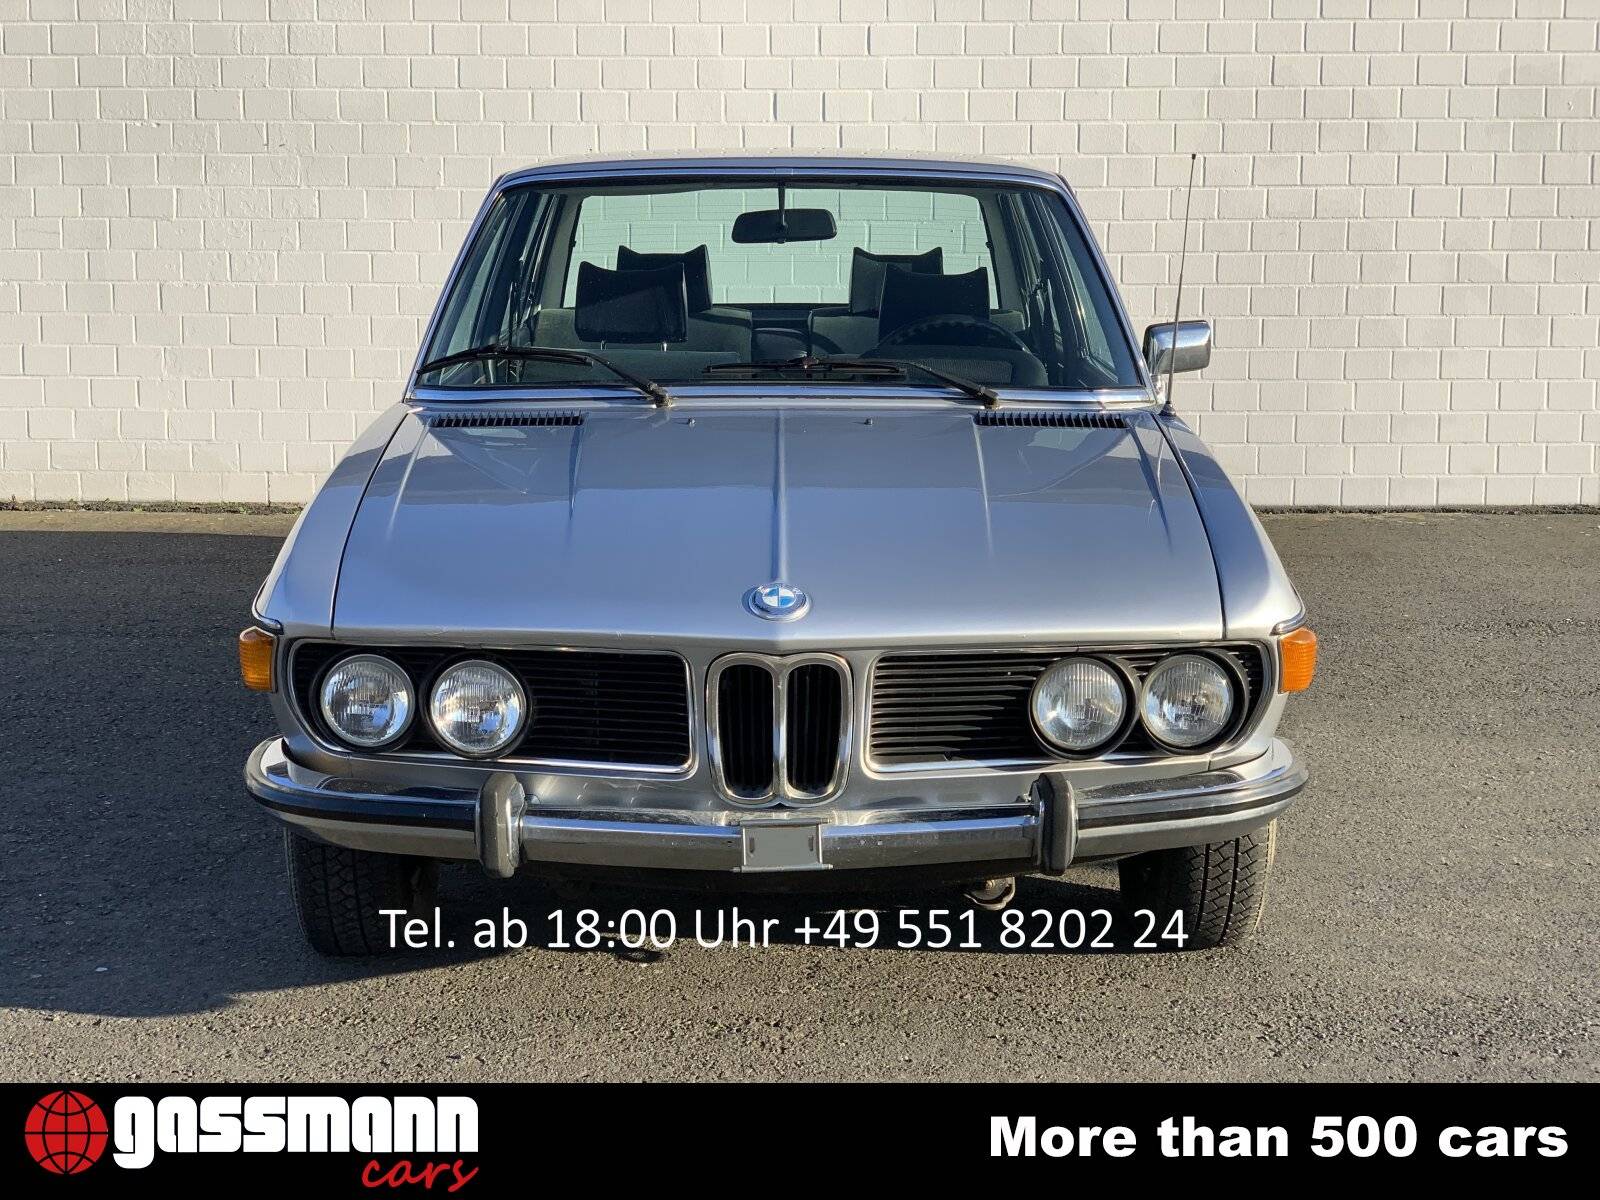 BMW 3,0 S (1974) en vente pour 31 000 €